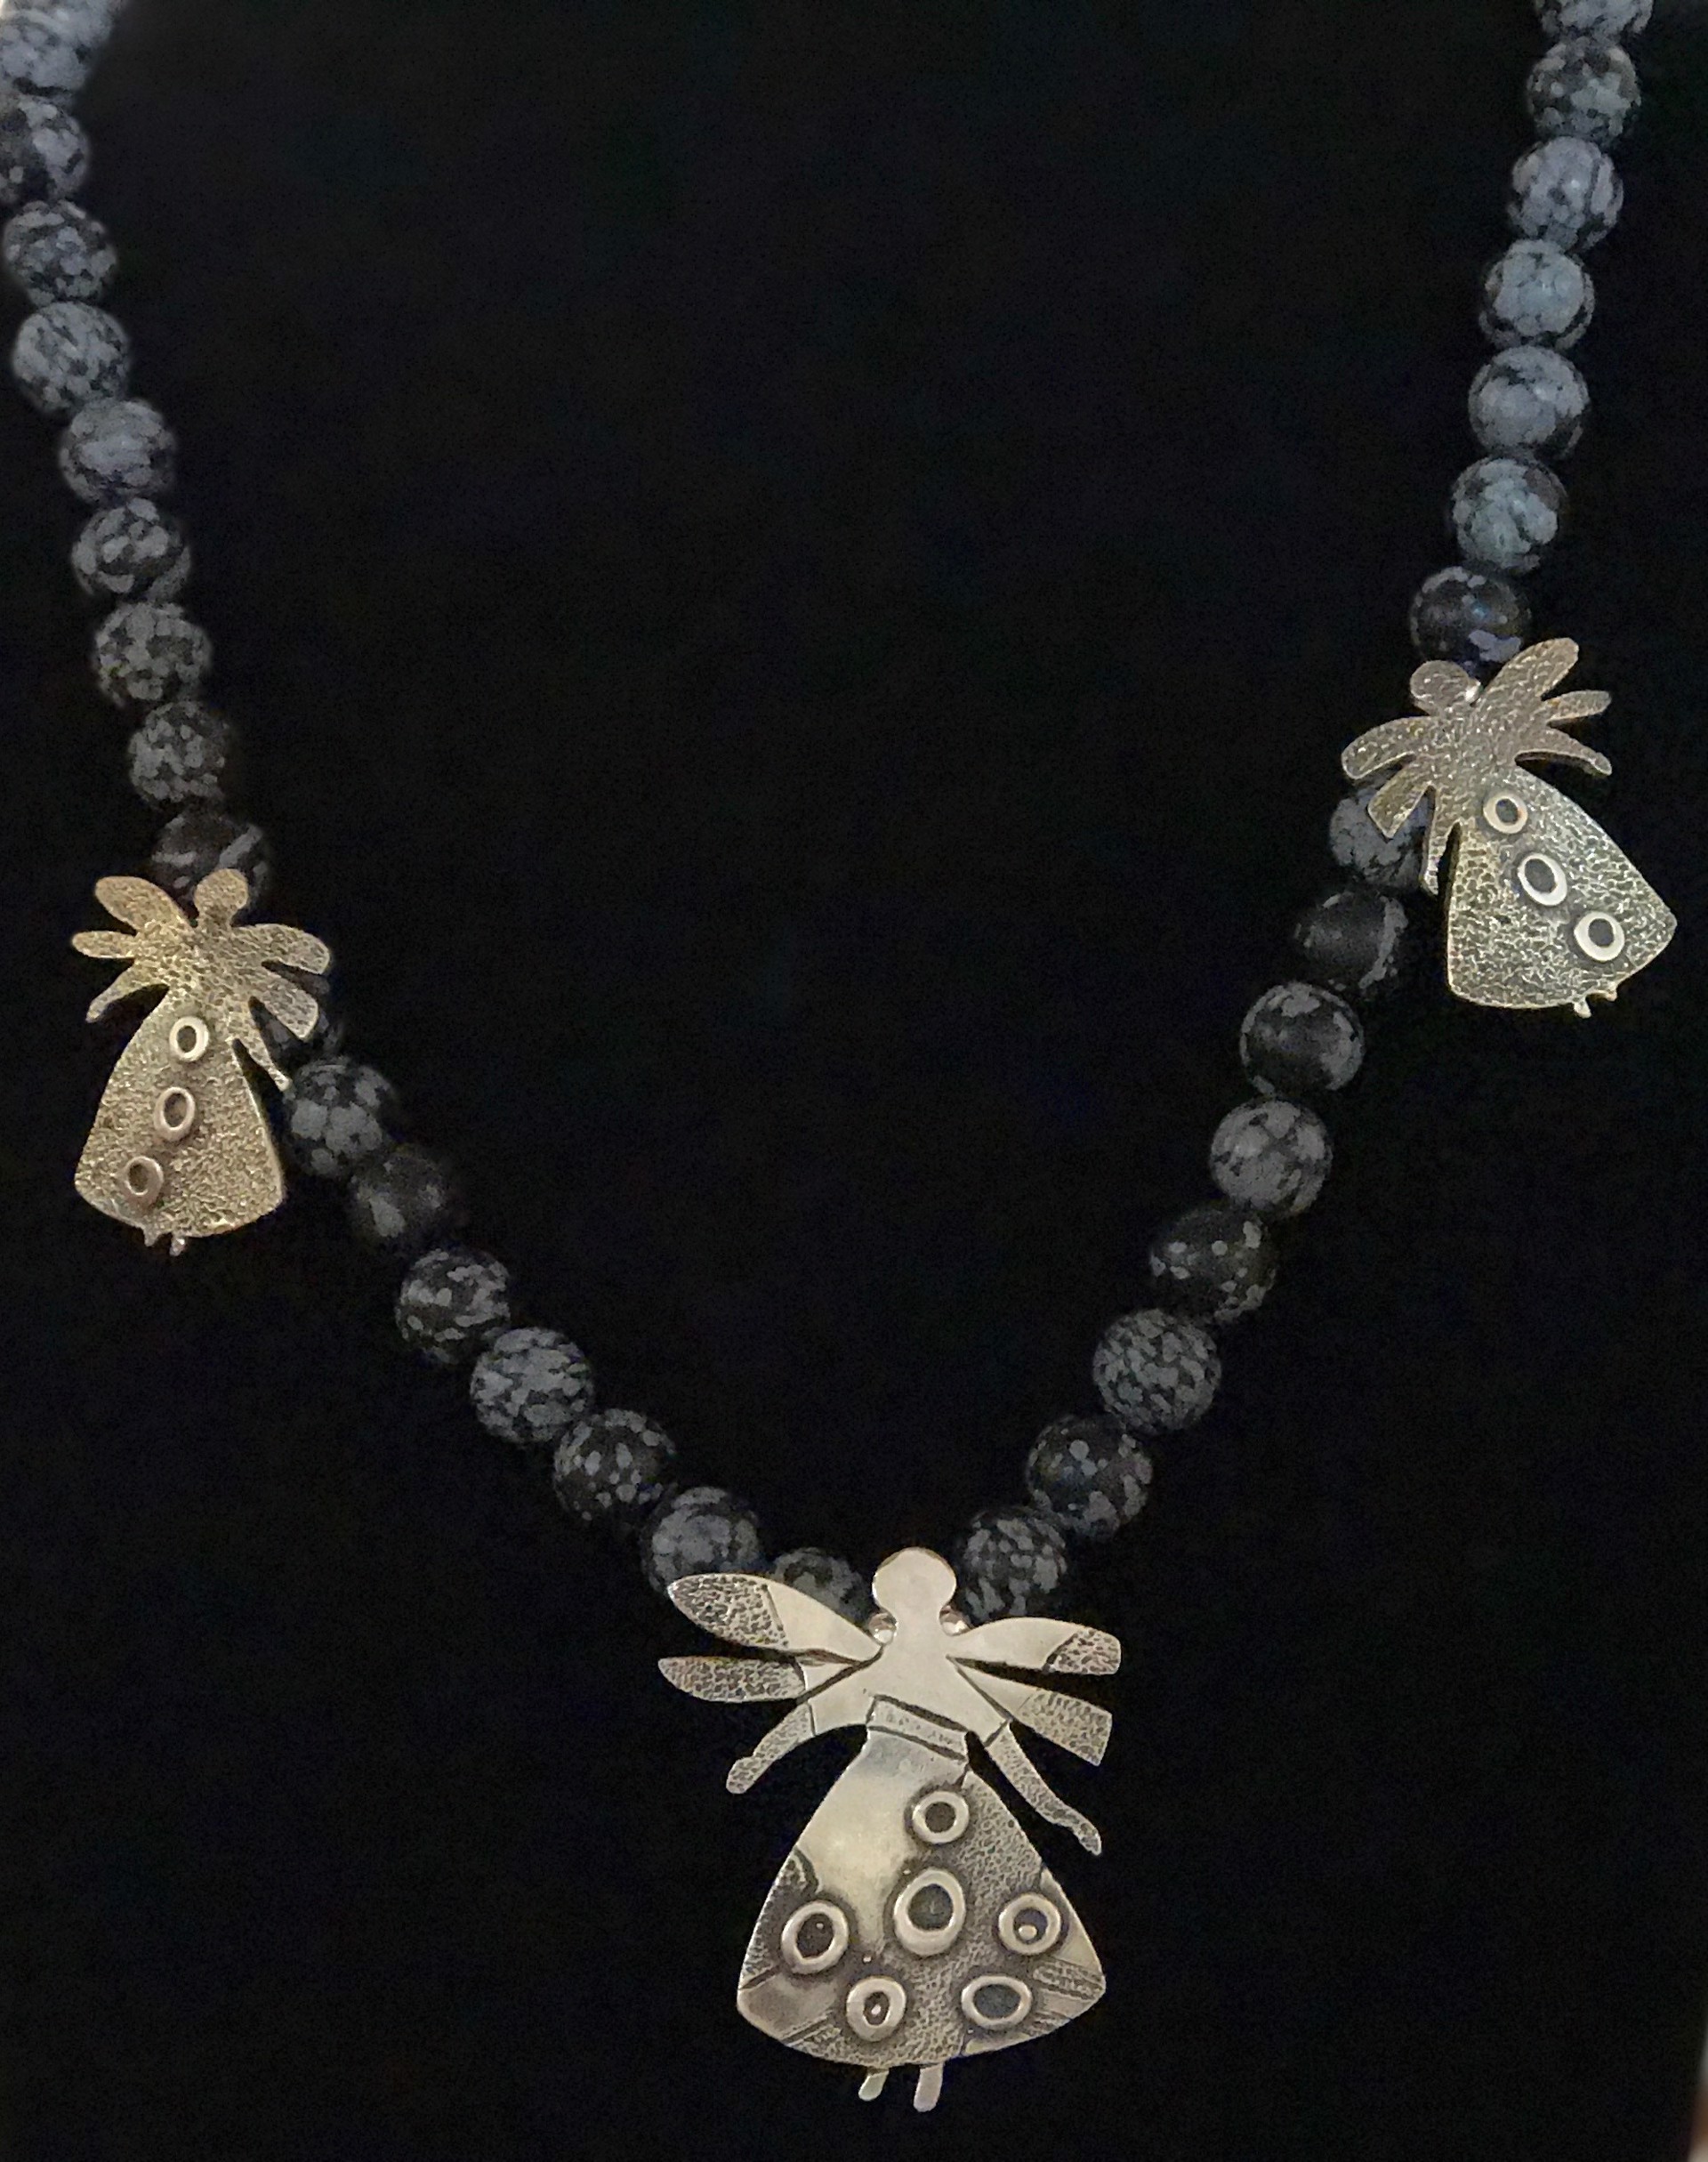 Pollinator necklace on snowflake obsidian beads by Melanie Yazzie